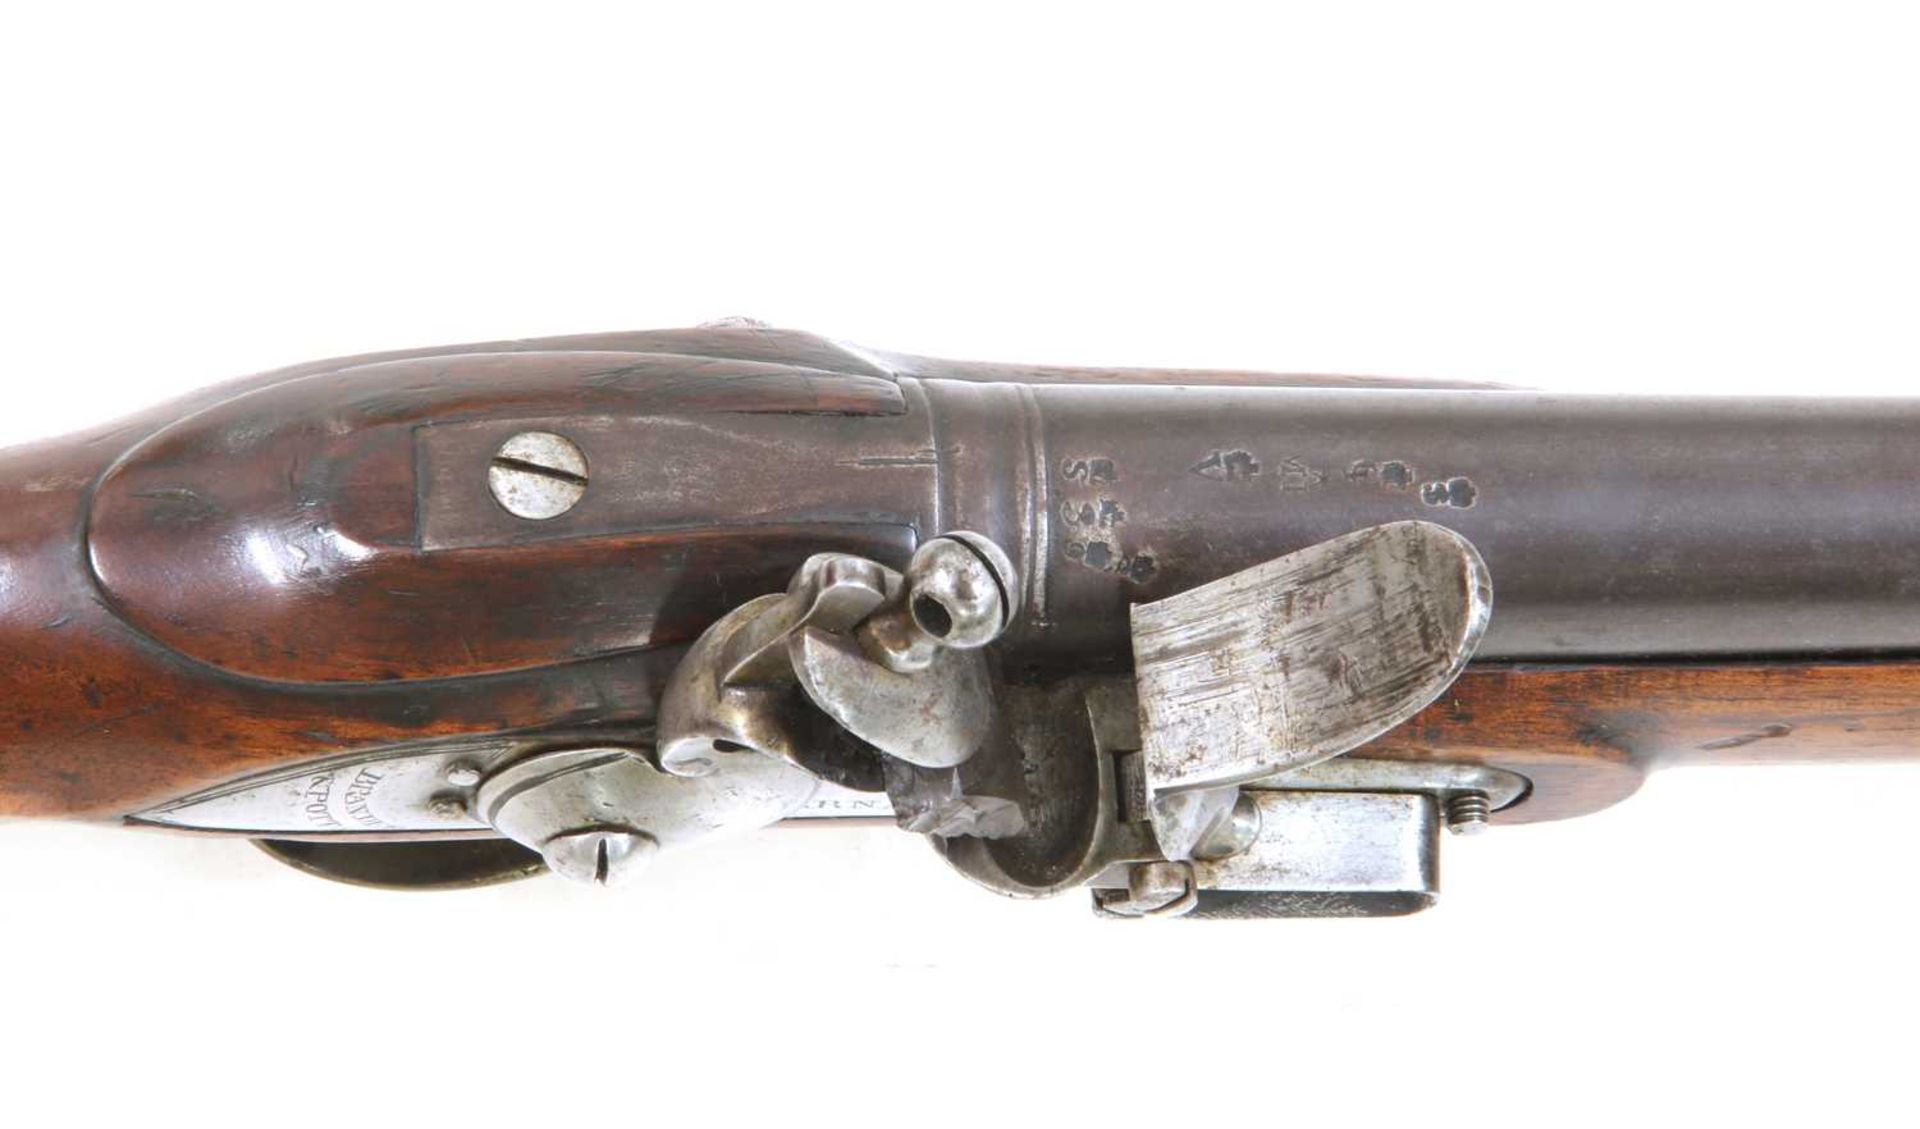 An Indian service steel barrelled flintlock musketoon, - Image 3 of 4